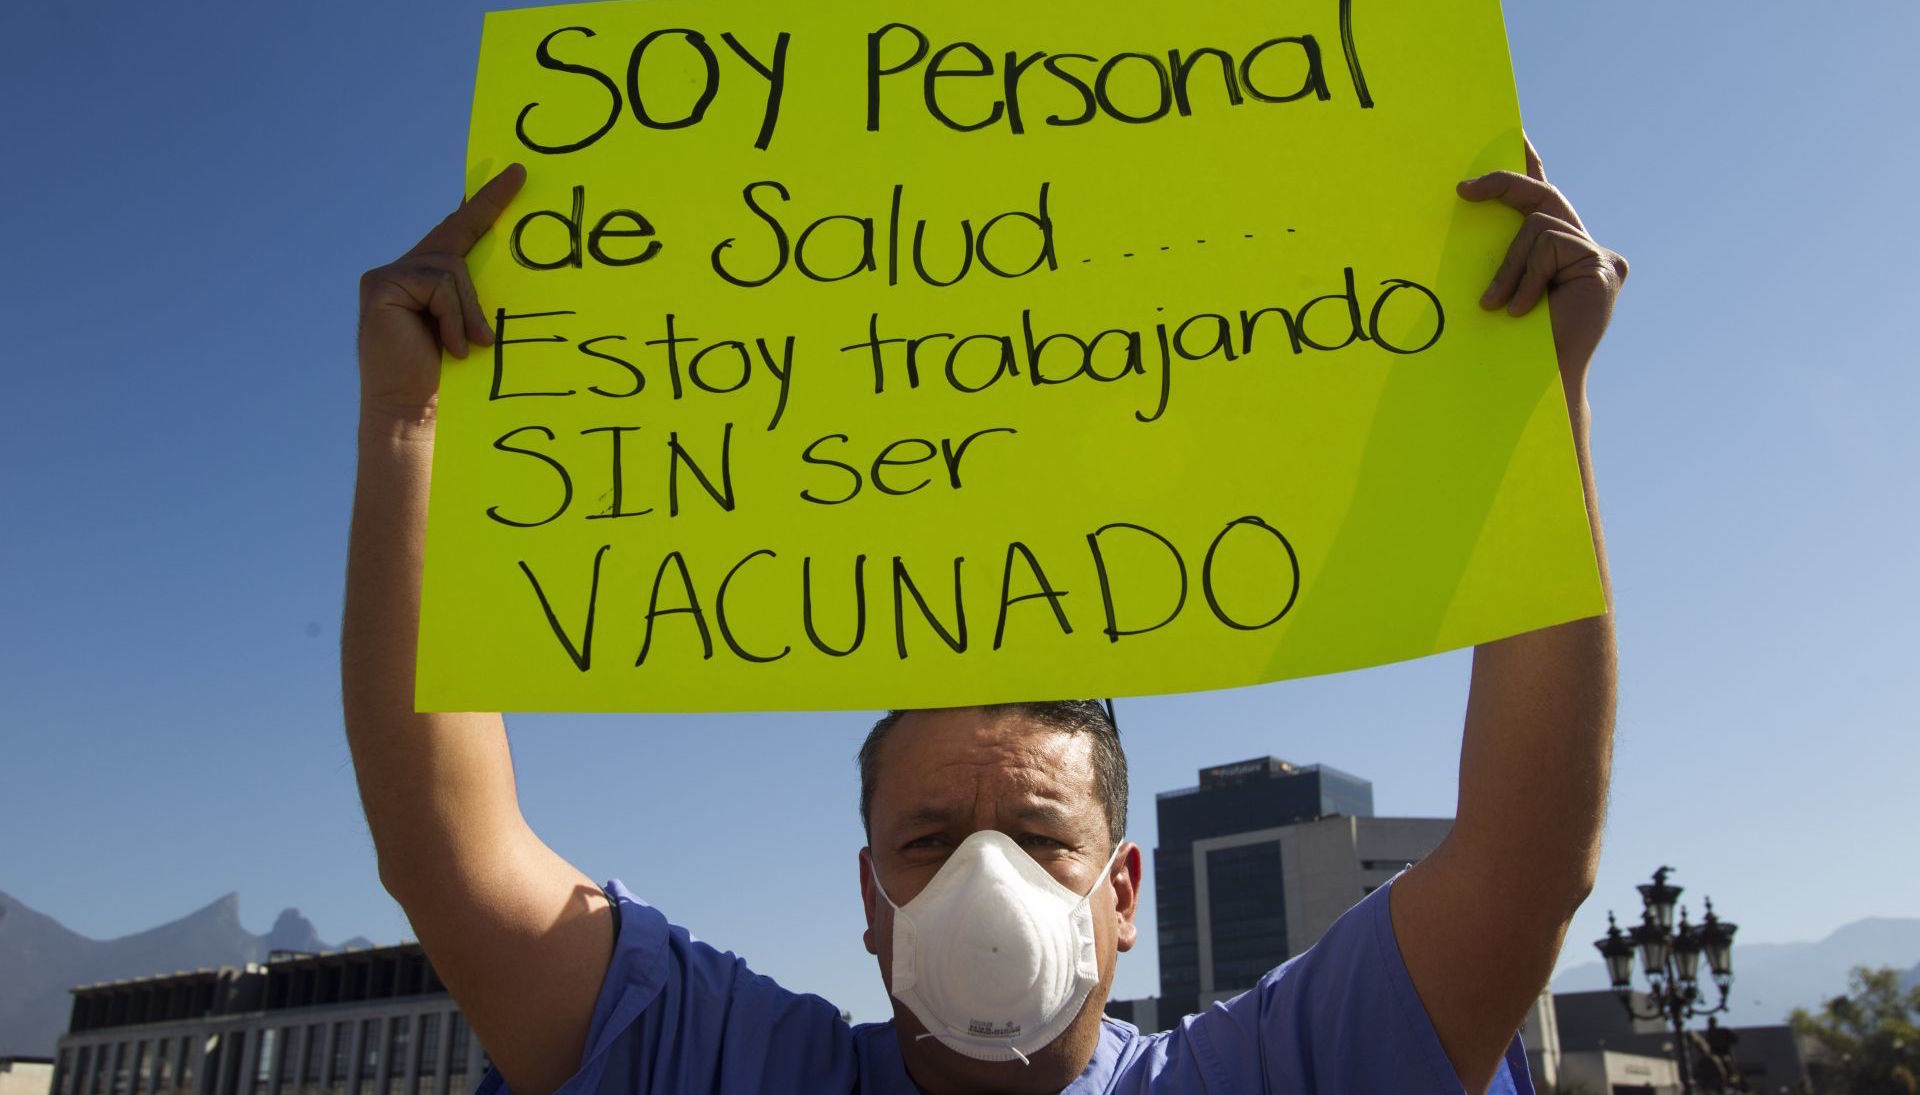 Sedena asks Jalisco to delay vaccination of medical staff